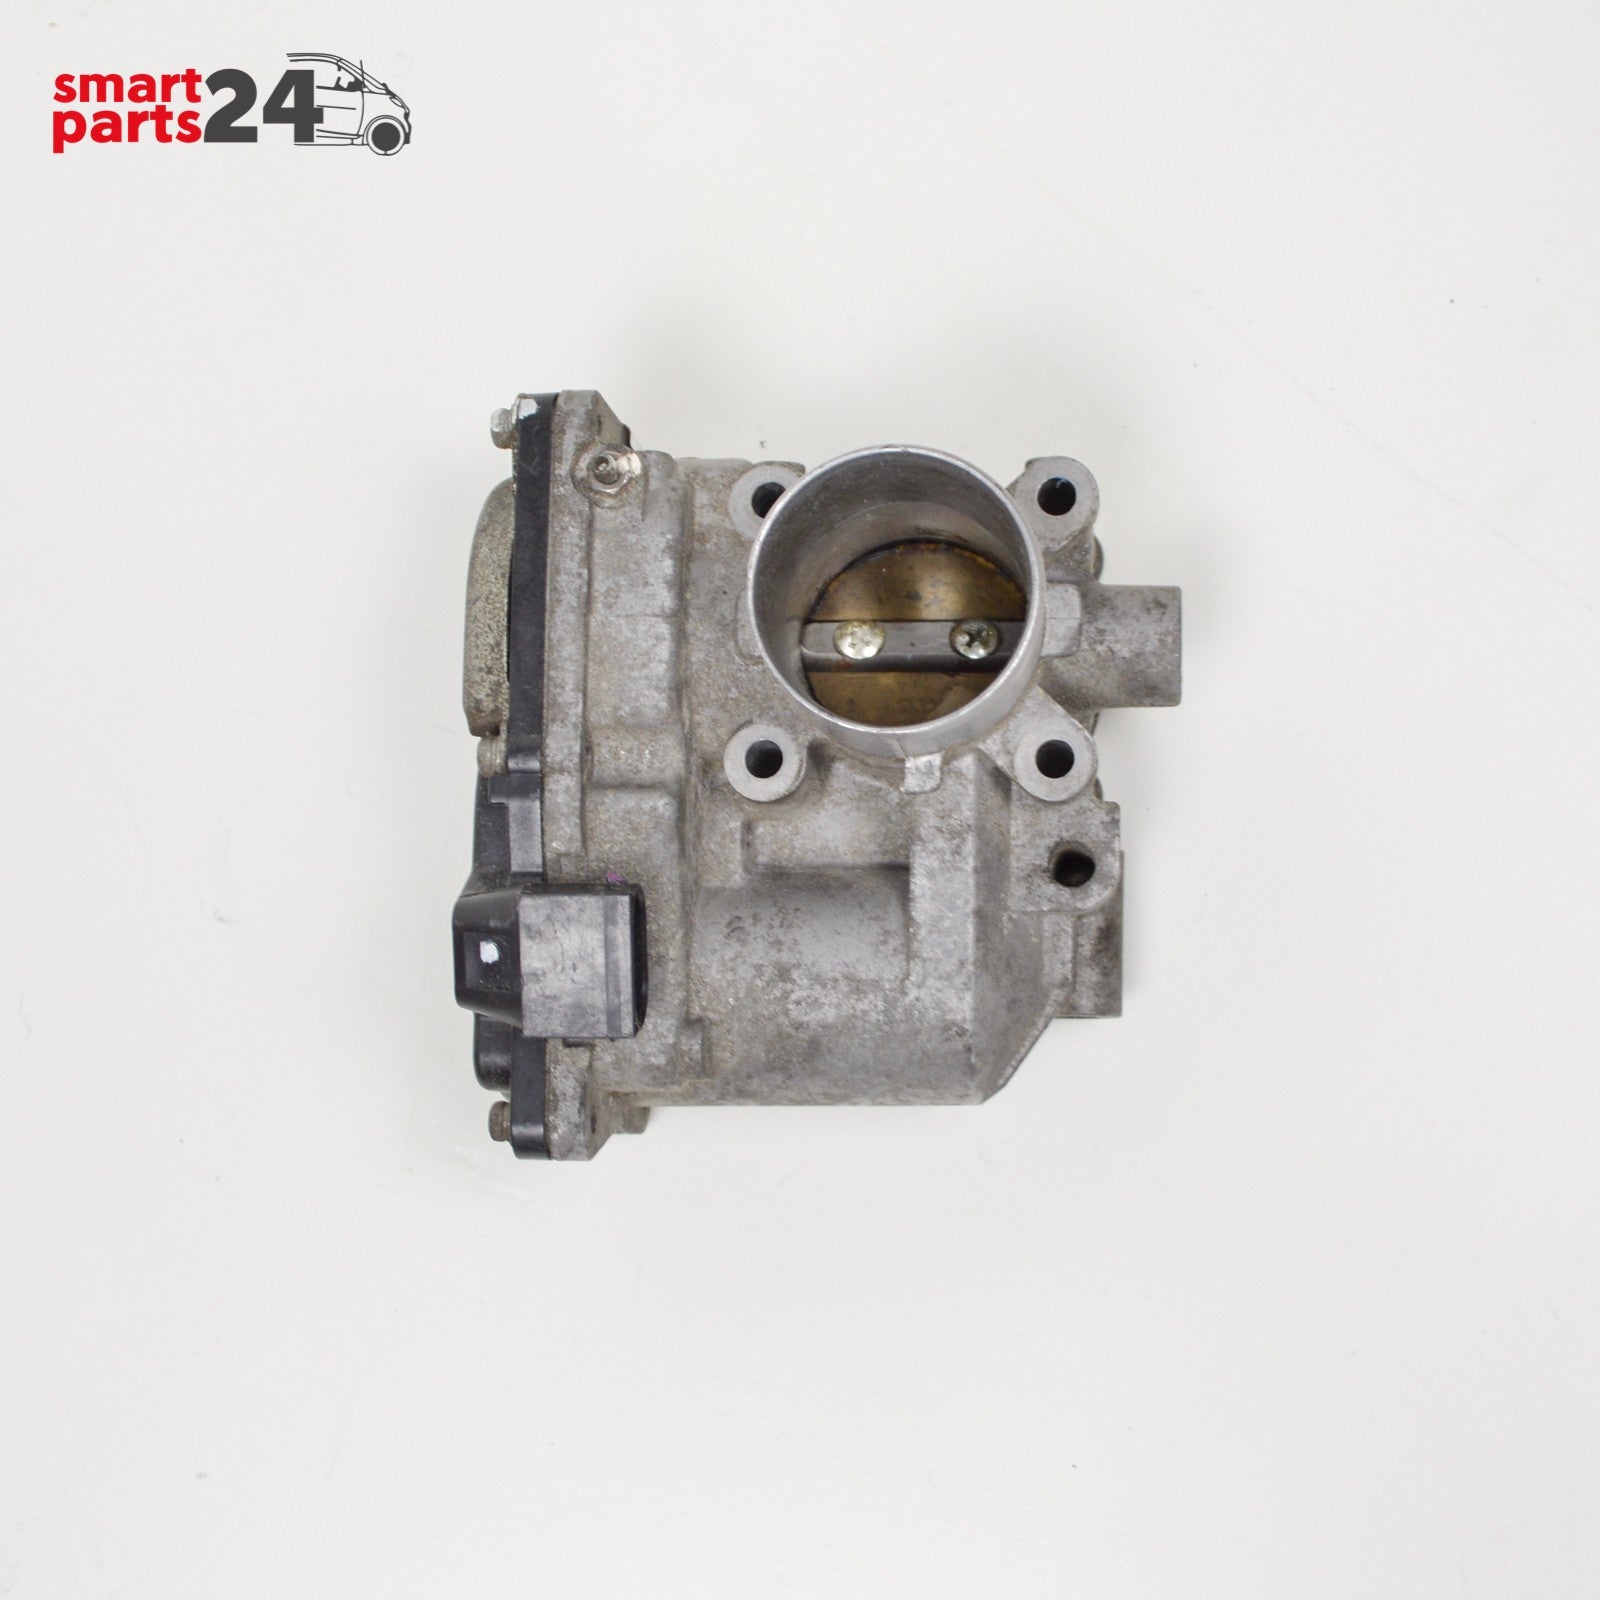 Smart Fortwo 451 throttle valve petrol engine A1320700027 (used)